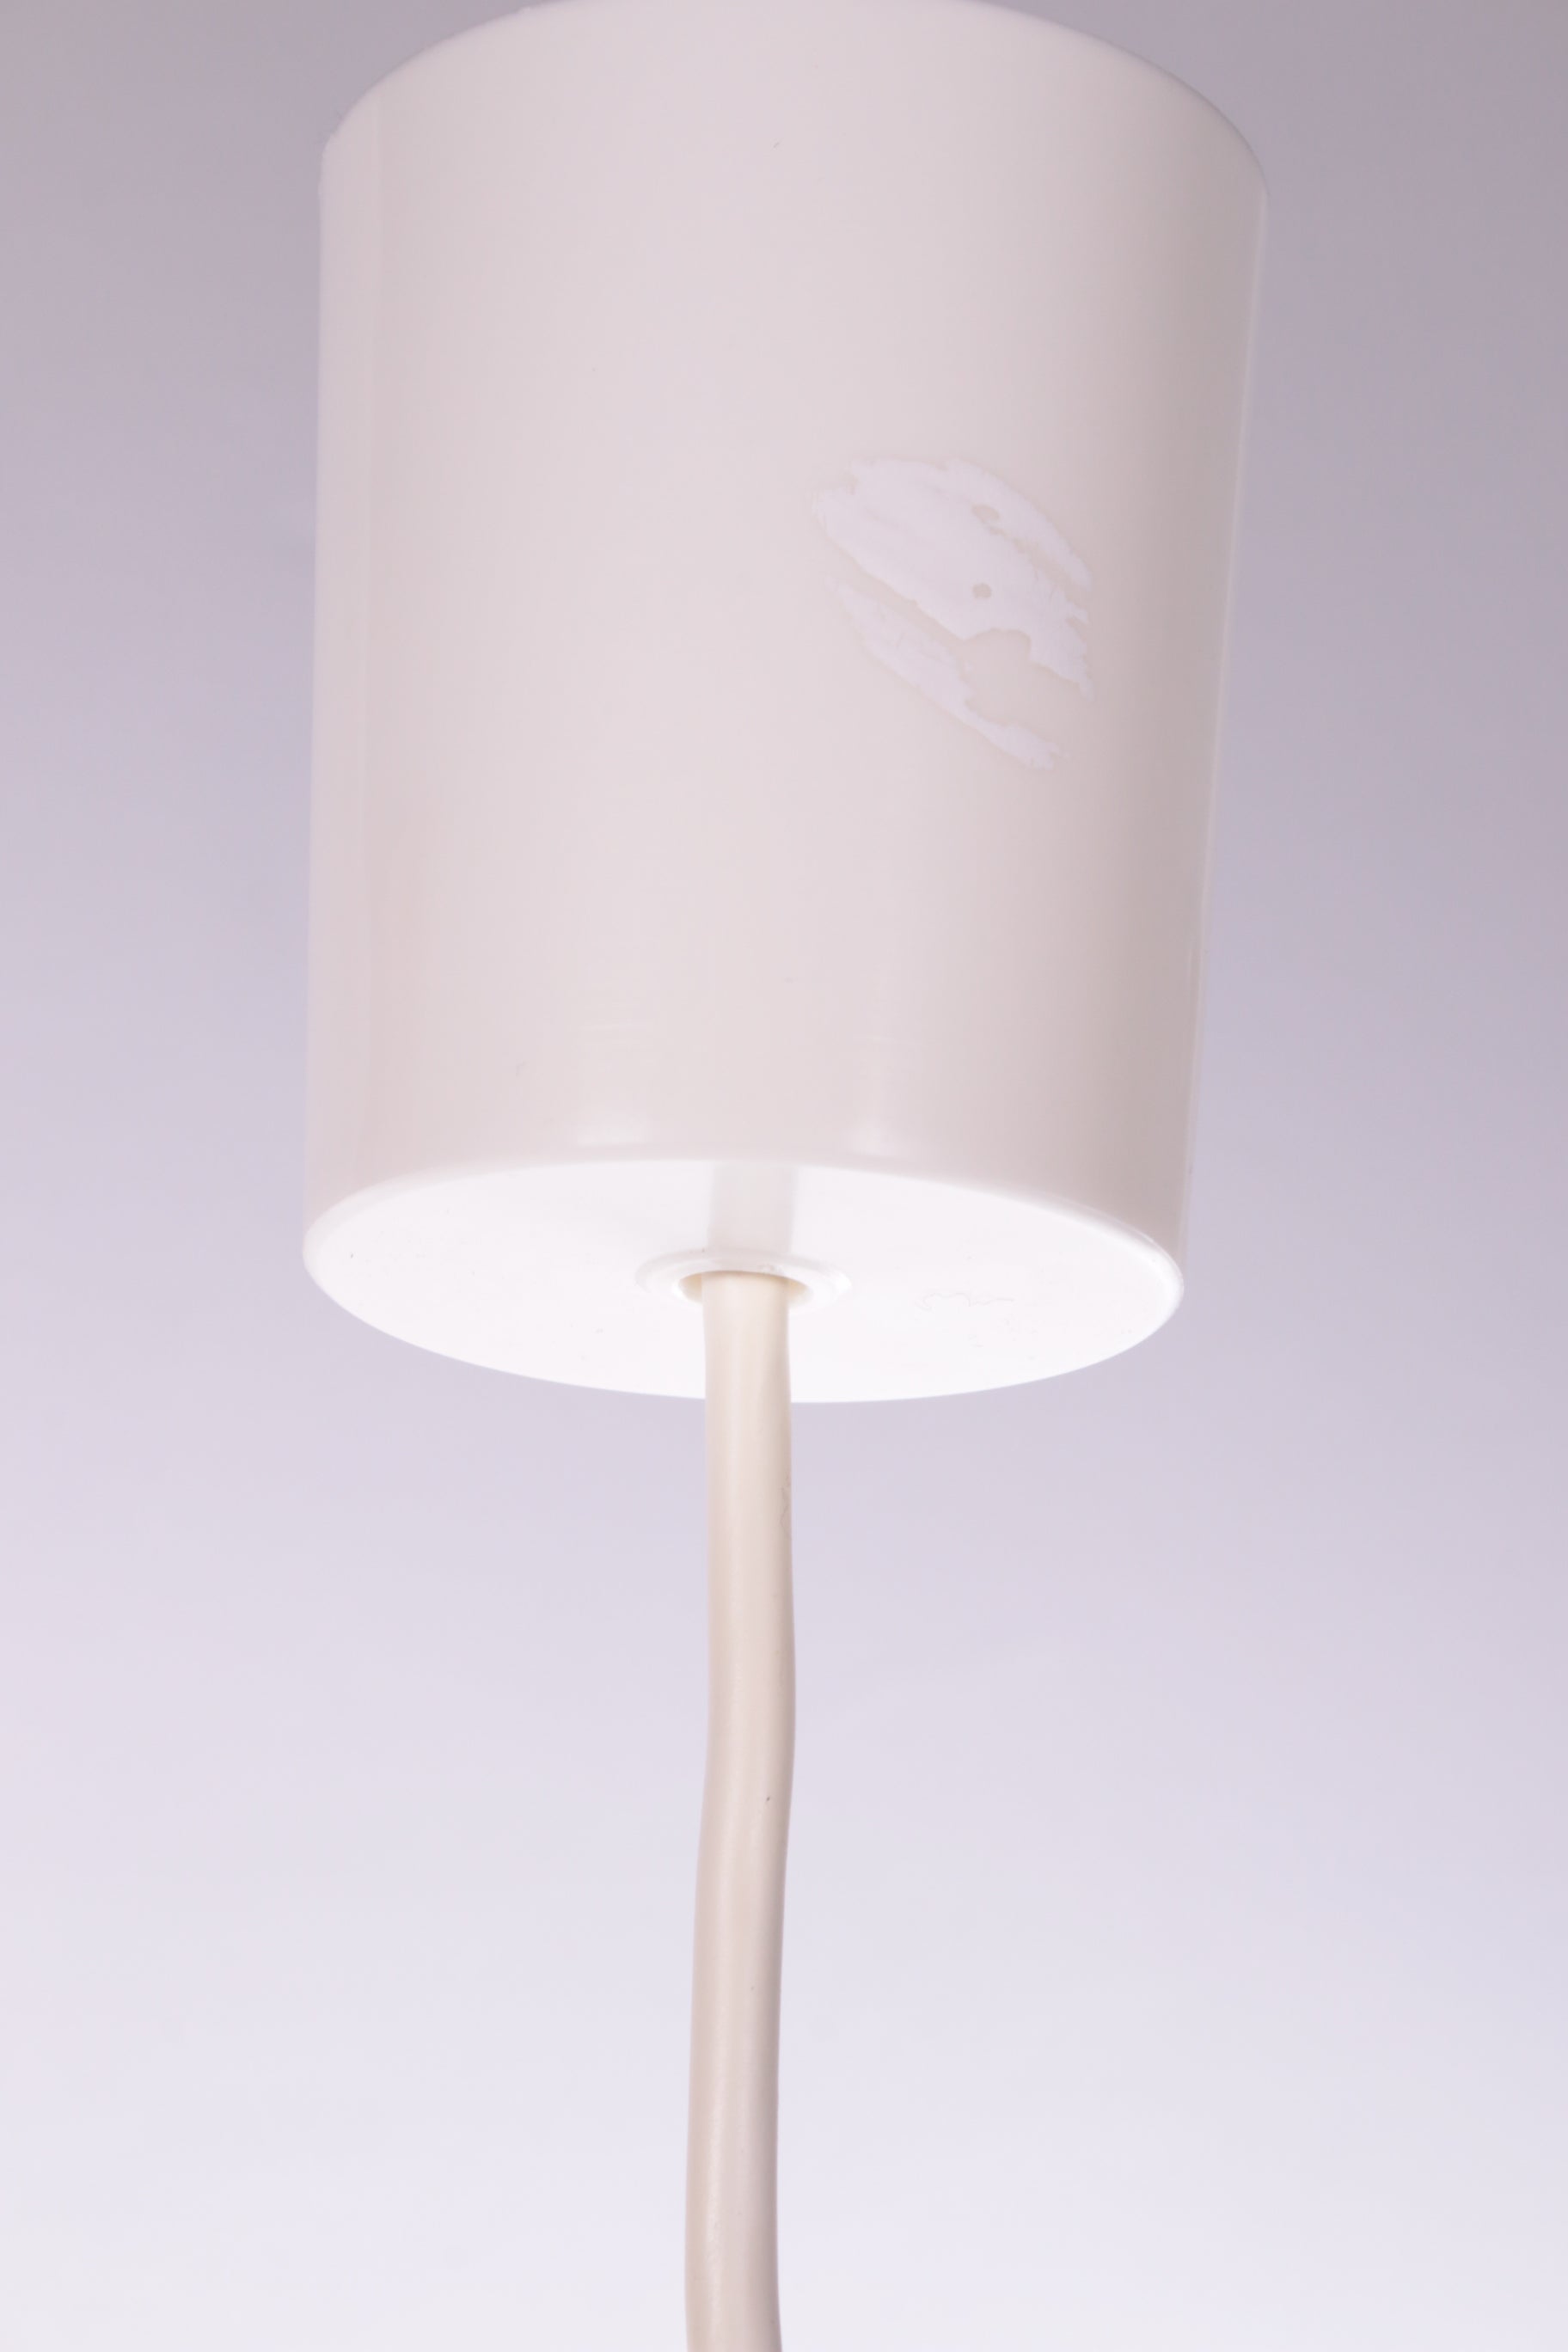 Vintage melkglas hanglamp  stekker